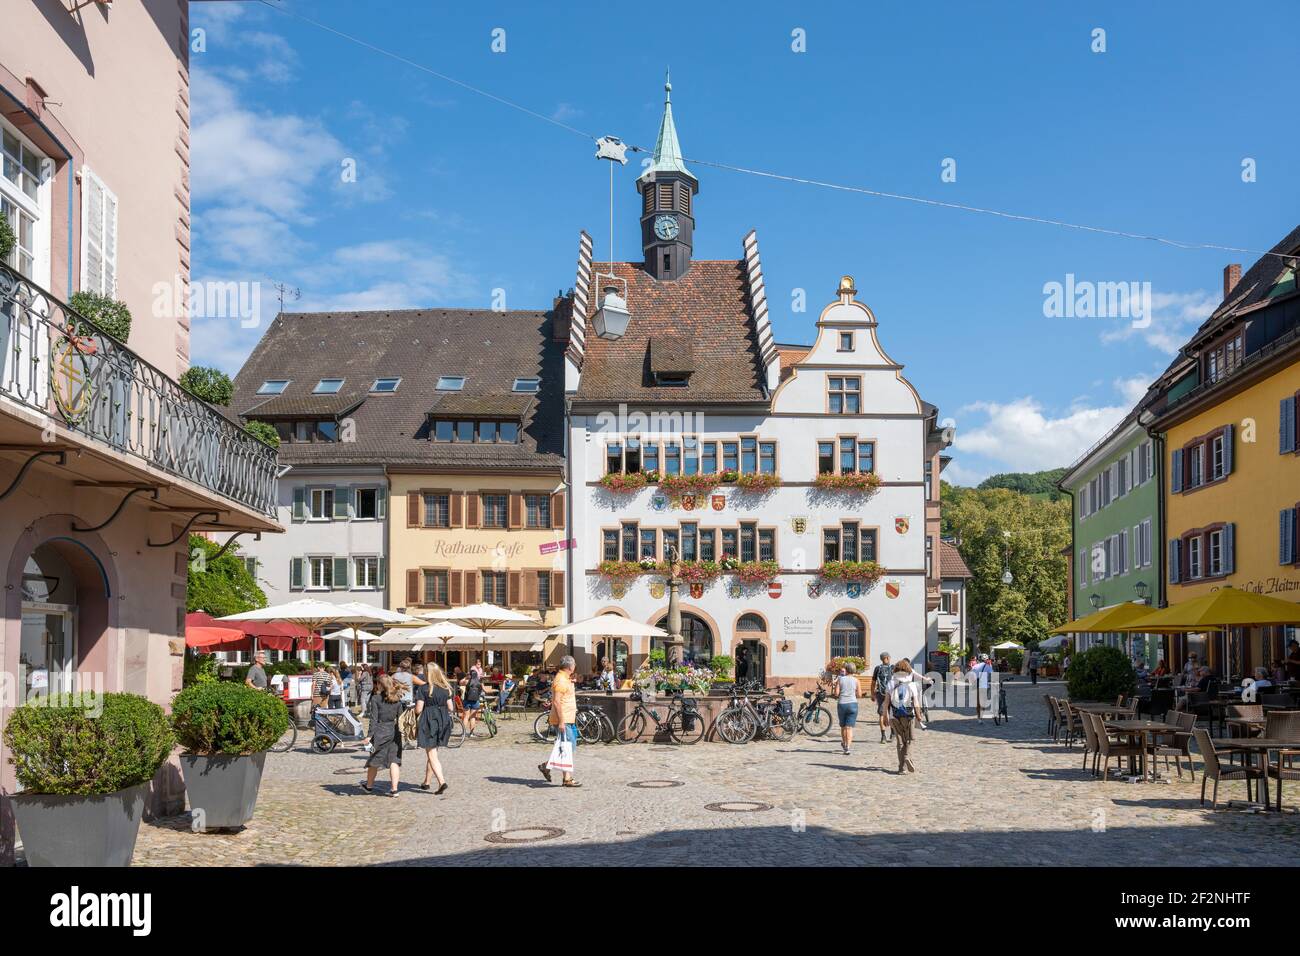 Germany, Baden-Wuerttemberg, Staufen, Rathausplatz. Stock Photo